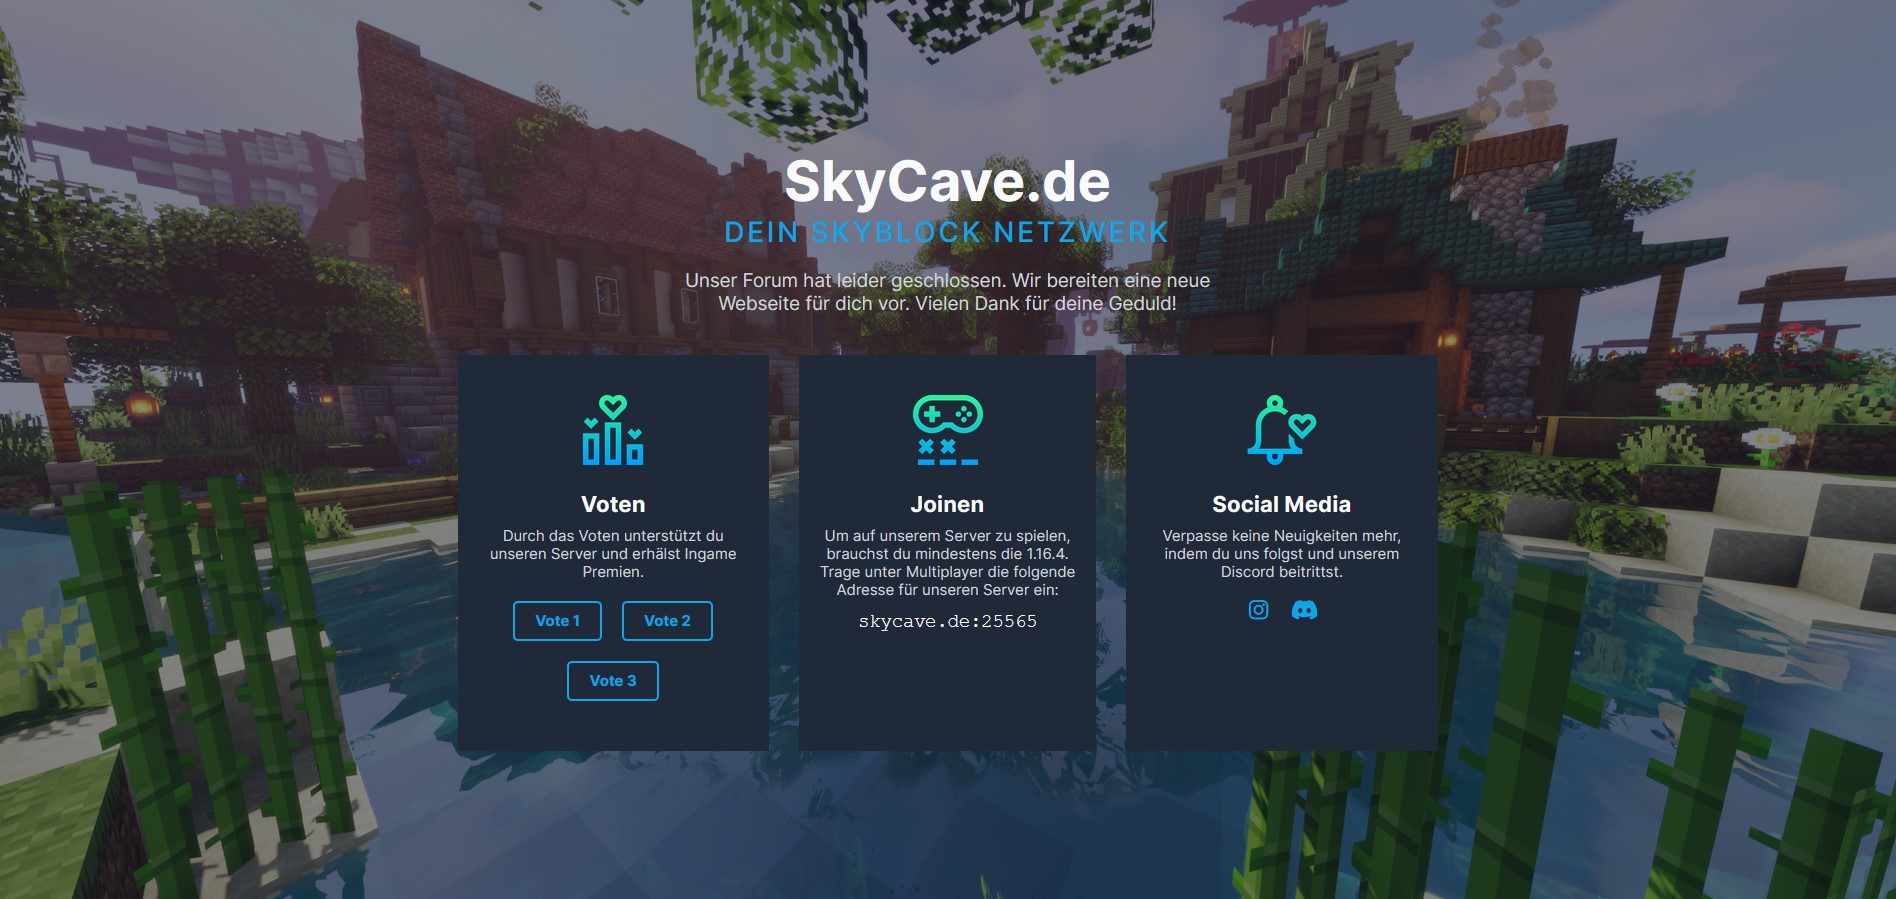 SkyCave website